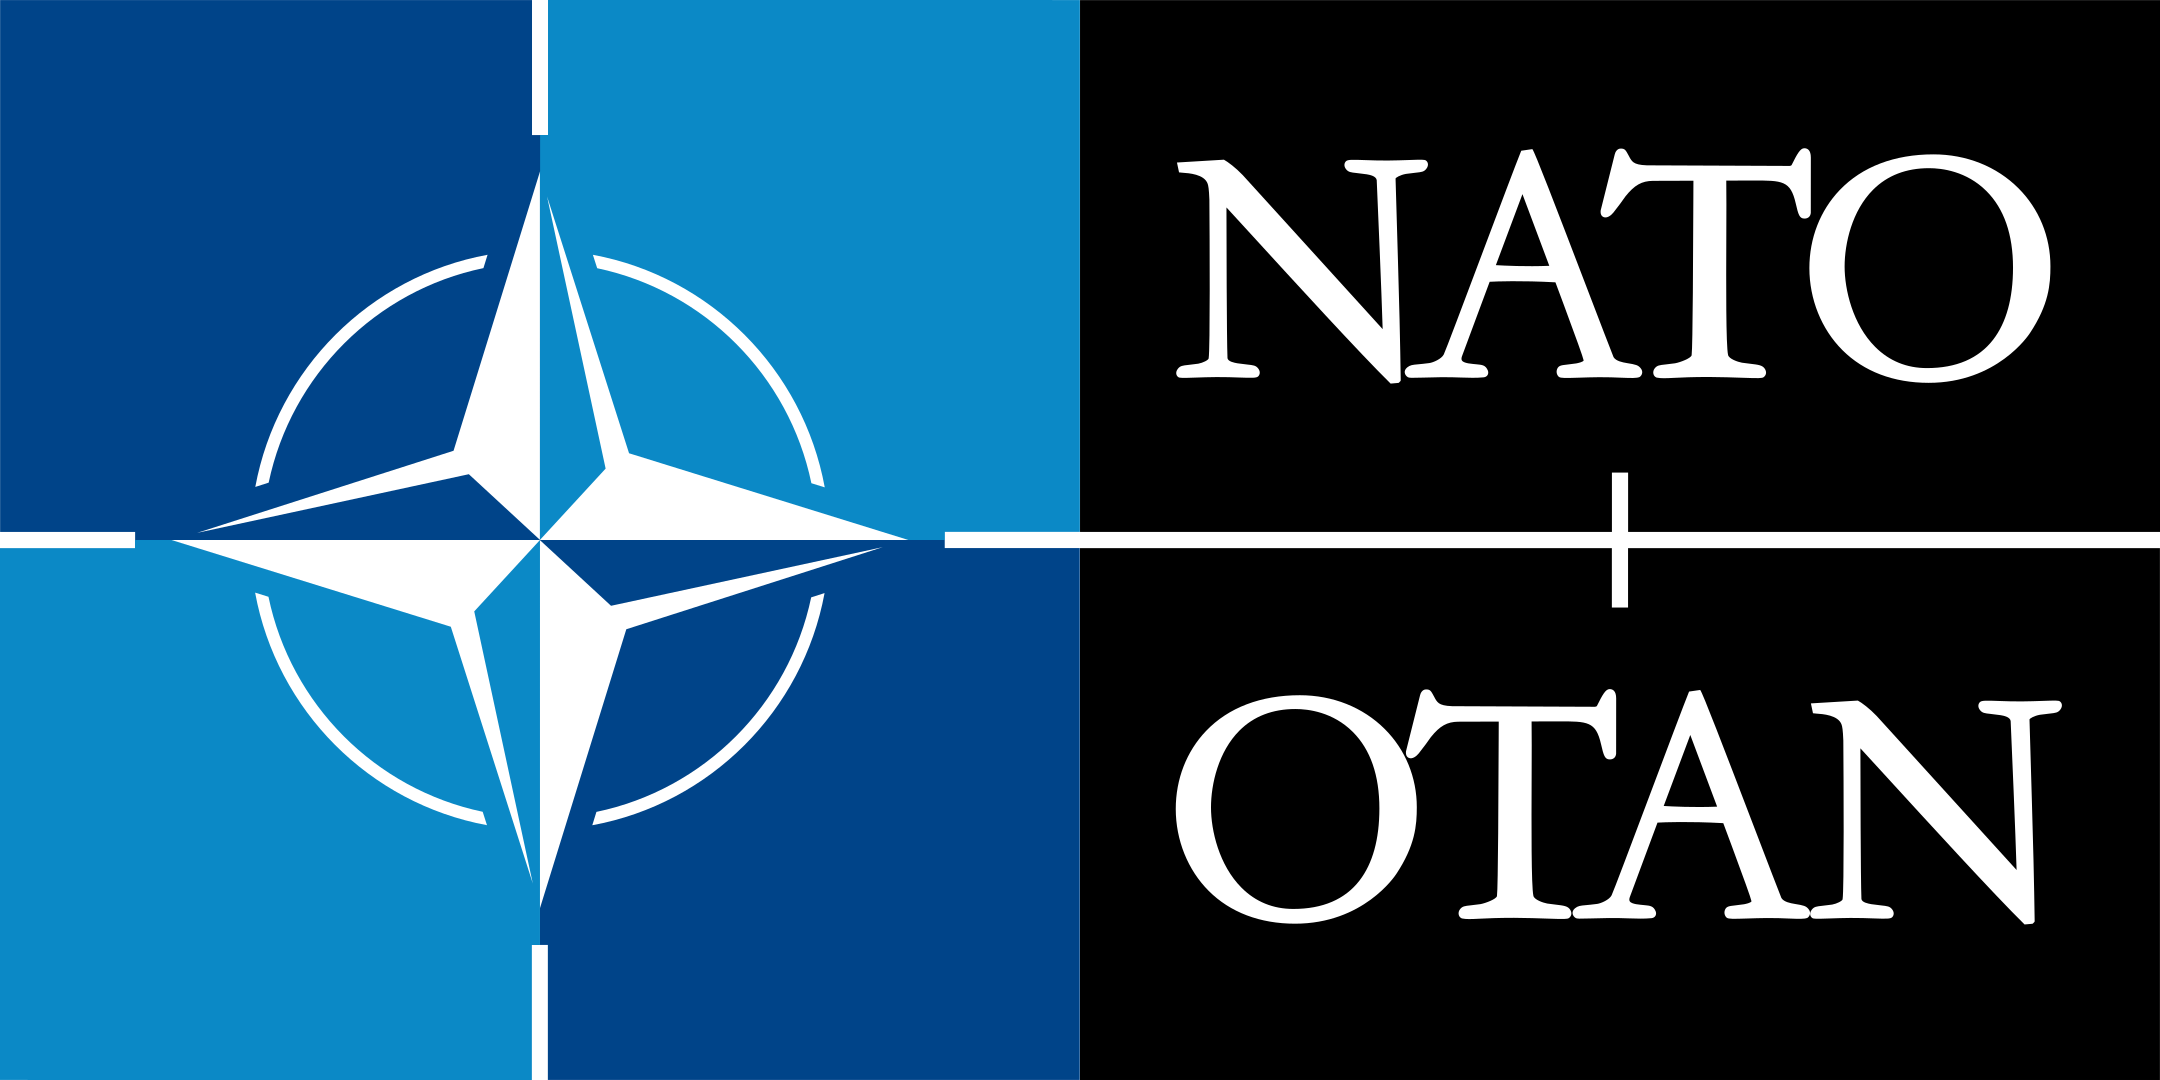 nato otan logo 1 - Nato Logo - Otan Logo